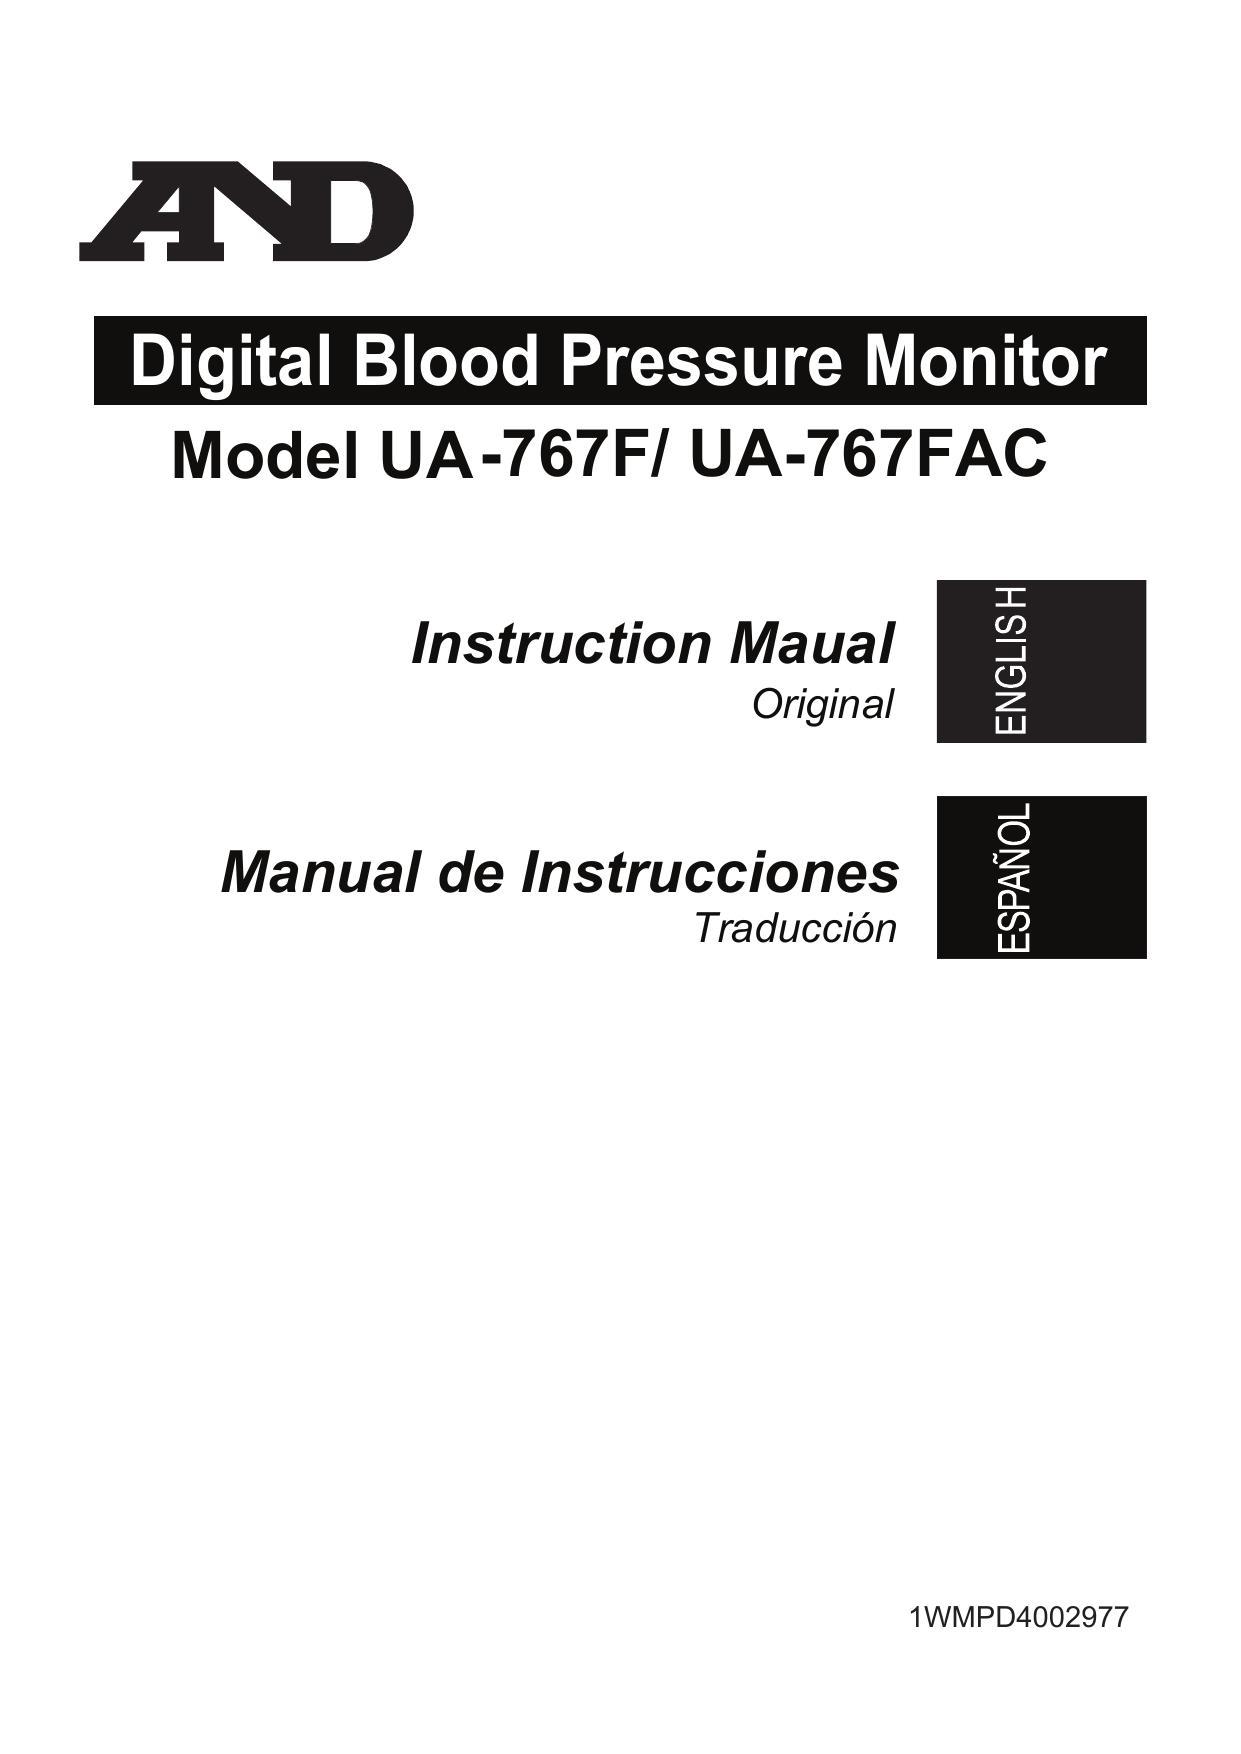 ad-digital-blood-pressure-monitor-model-ua-767fi-ua-767fac-instruction-manual.pdf